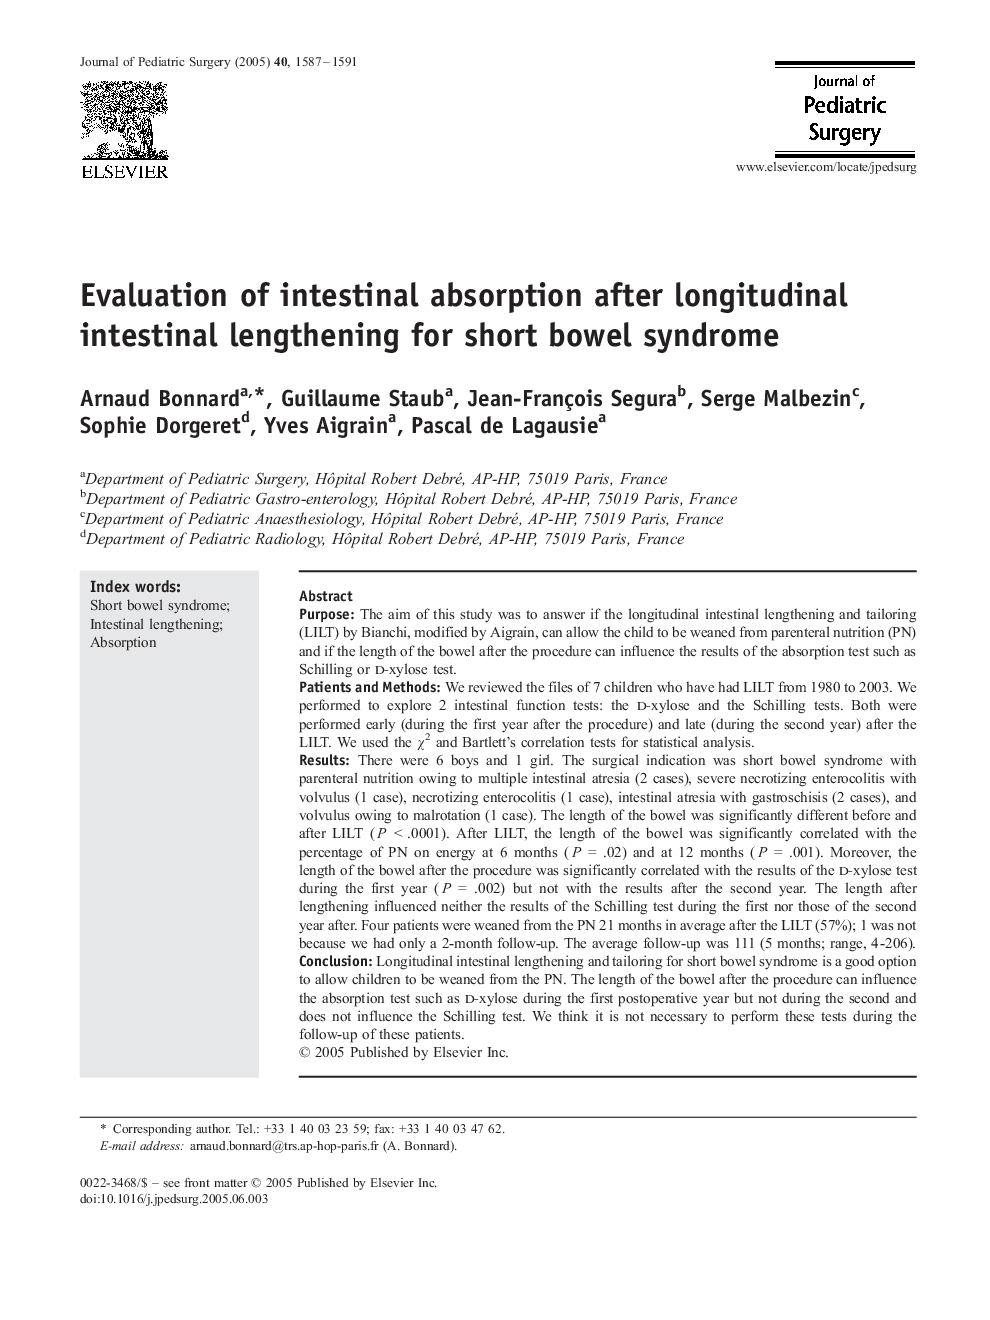 Evaluation of intestinal absorption after longitudinal intestinal lengthening for short bowel syndrome